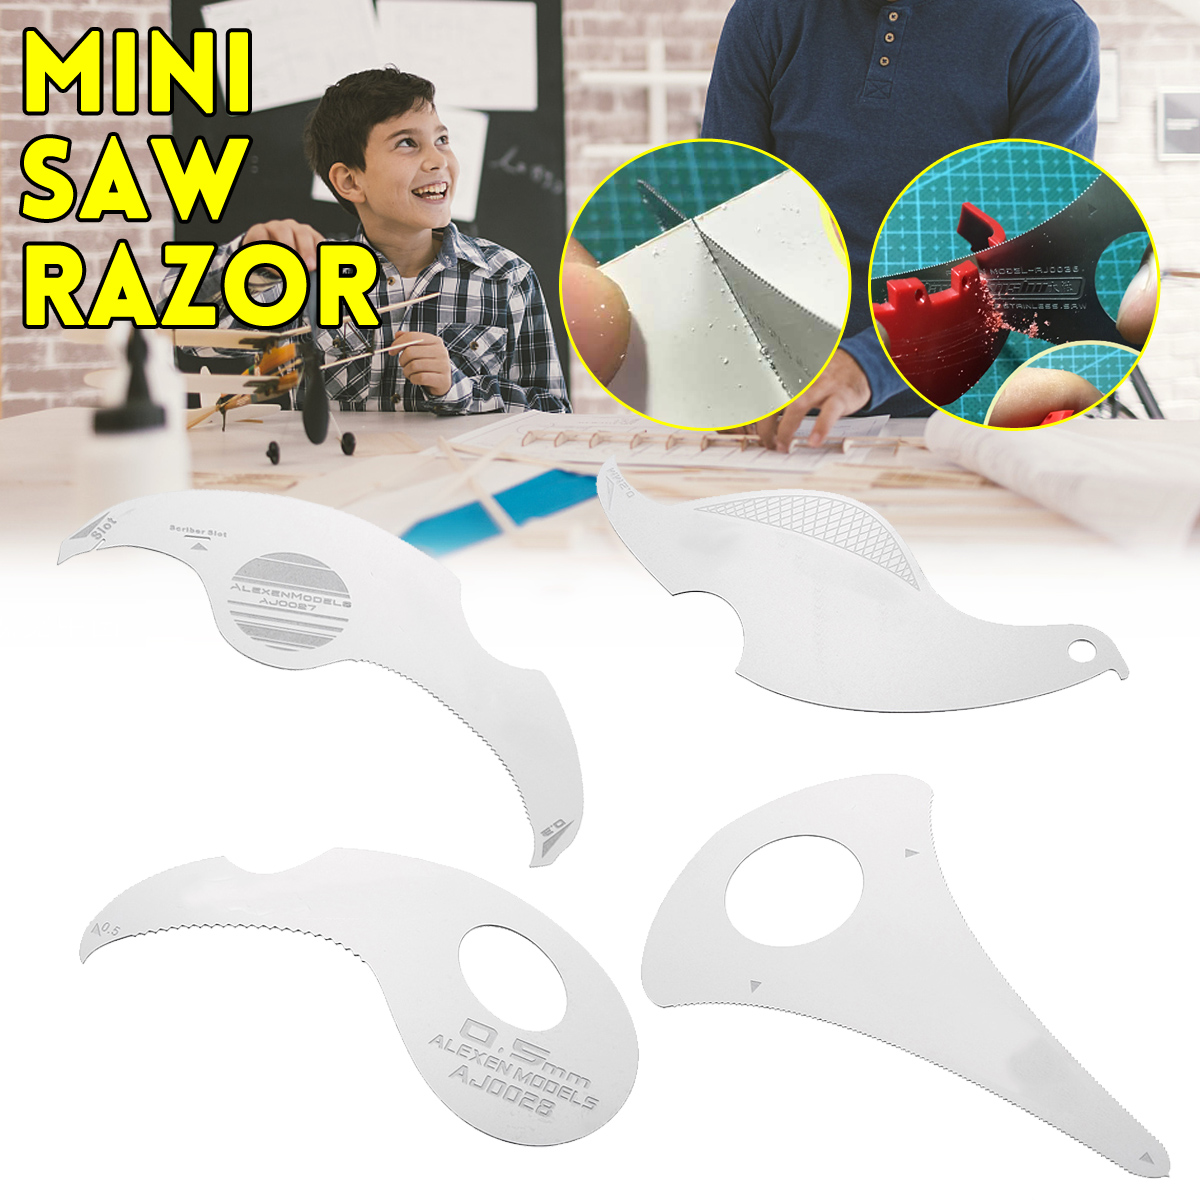 Mini-Handy-Craft-Metal-Saws-Mini-Saw-Razor-Saw-Tools-Modeling-Tool-1674902-1